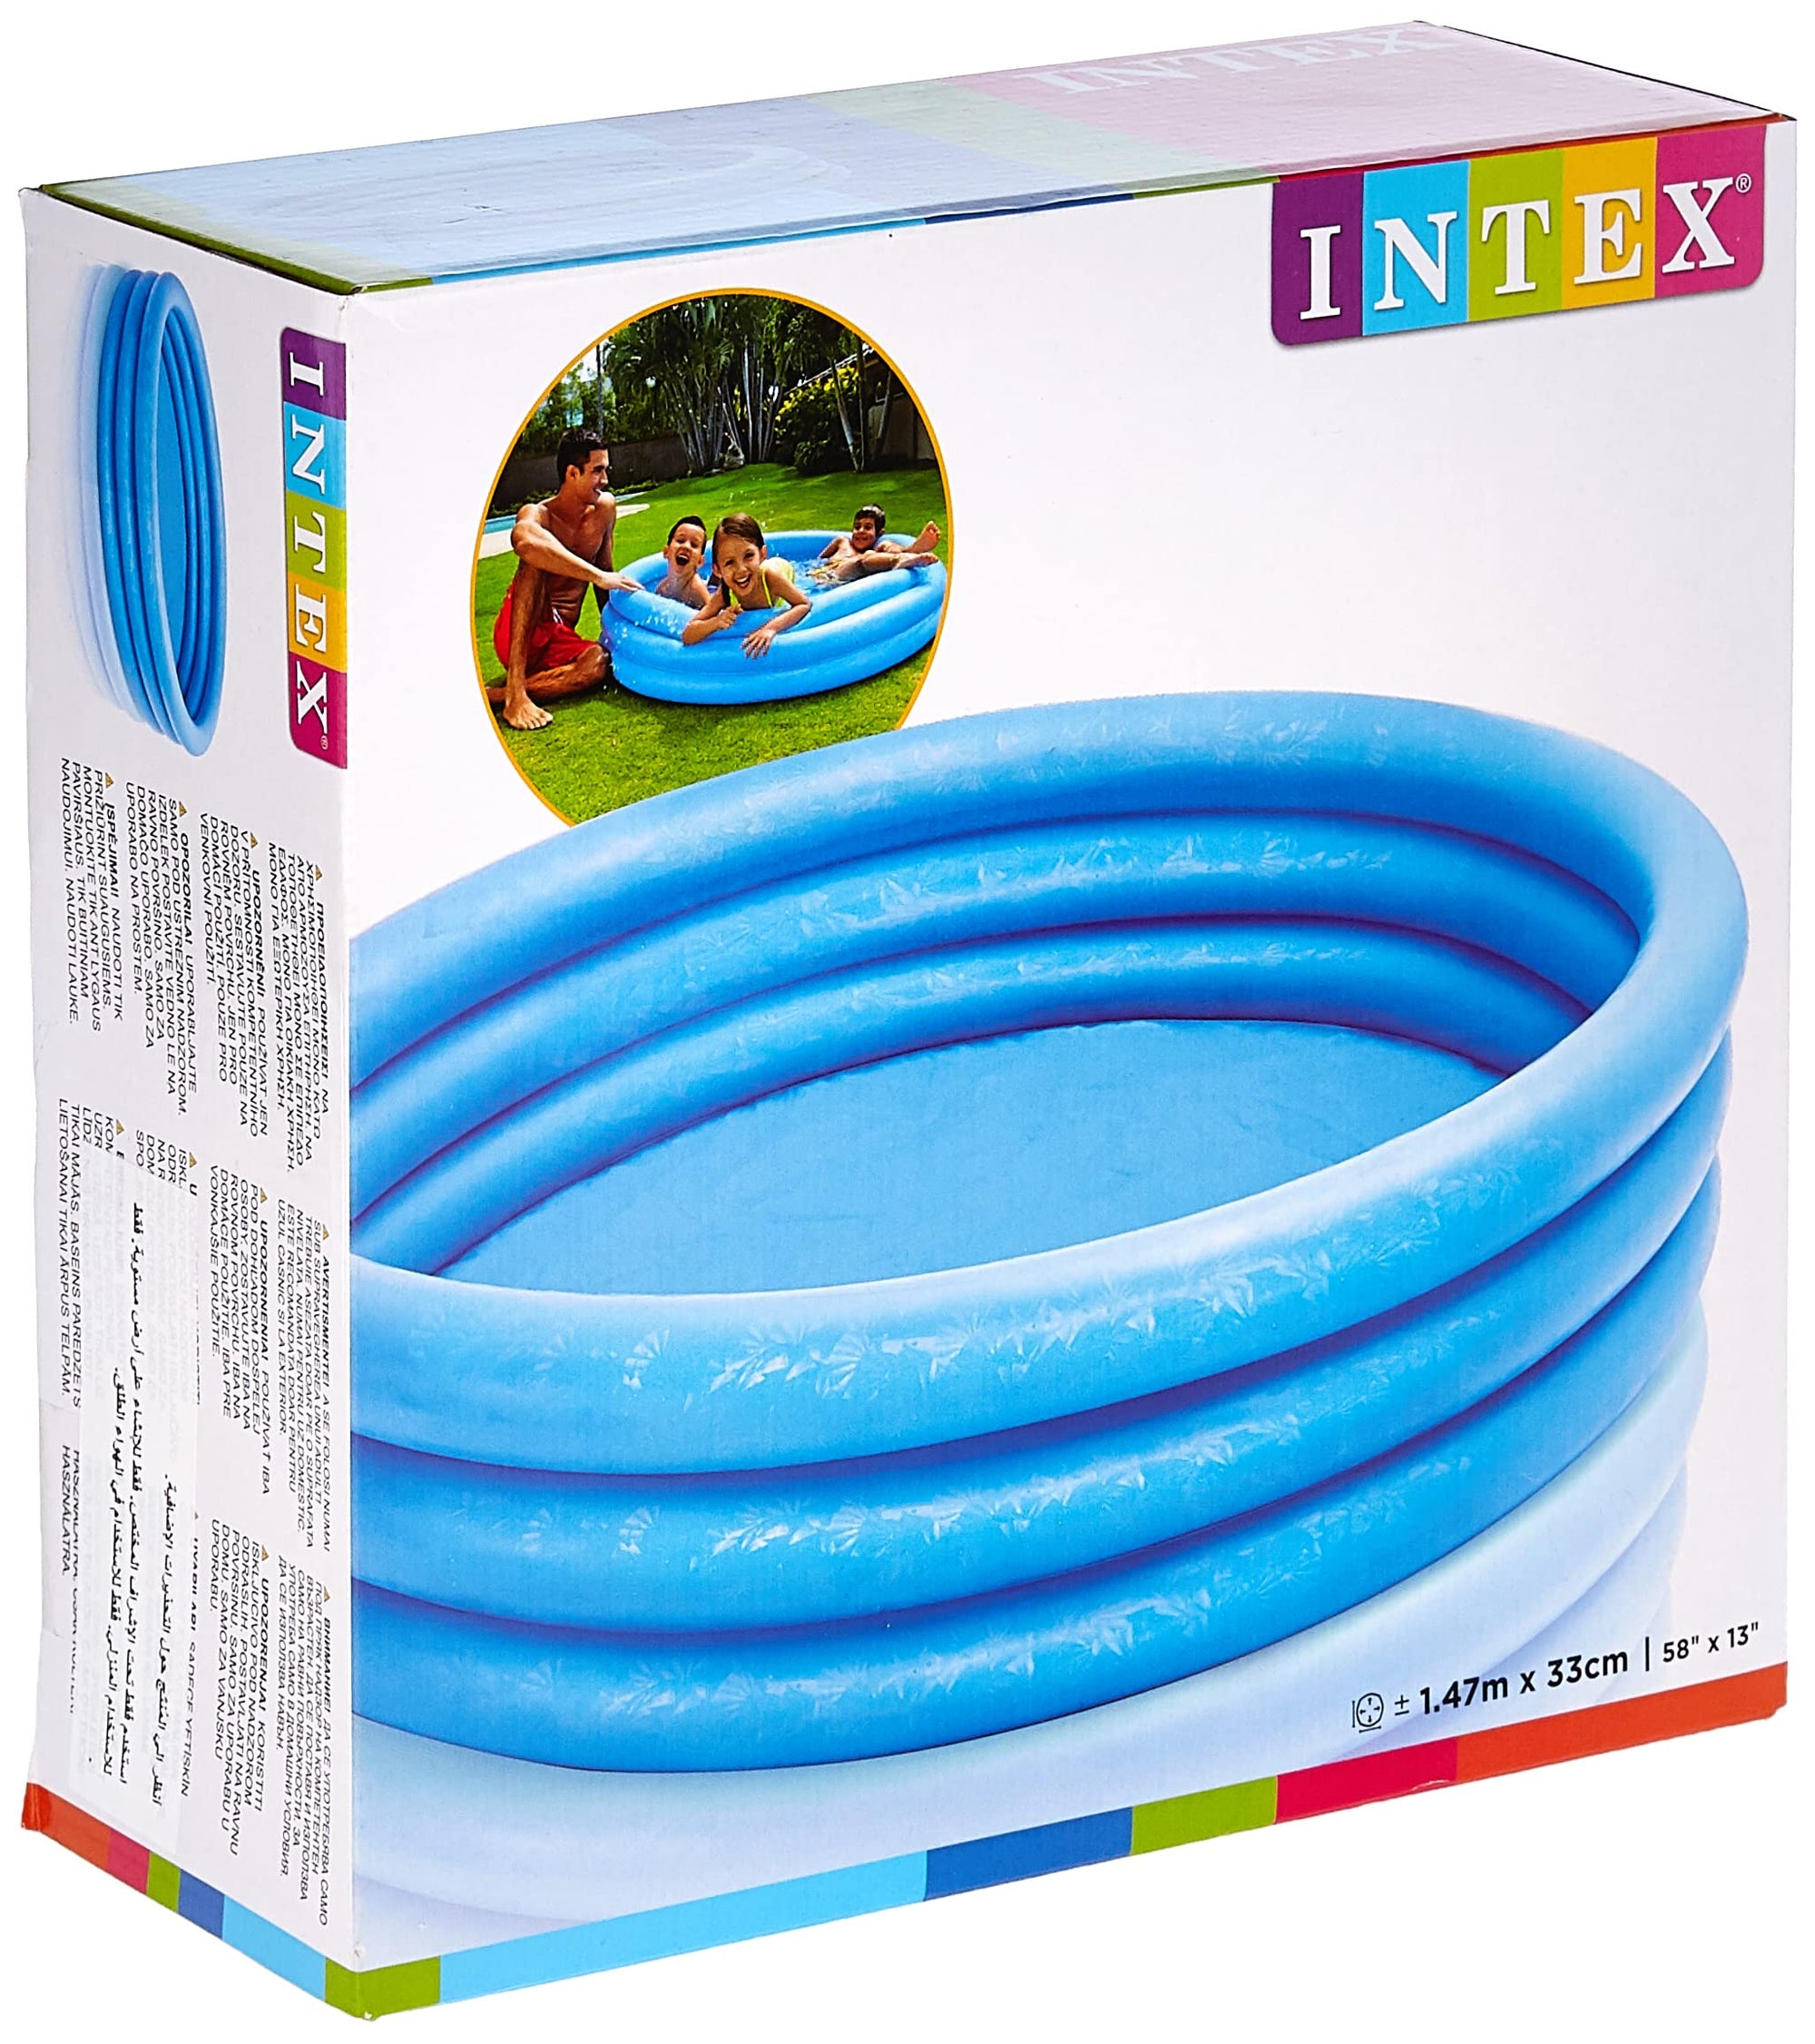 Intex Crystal Blue Round Pool 1.47m x 33cm